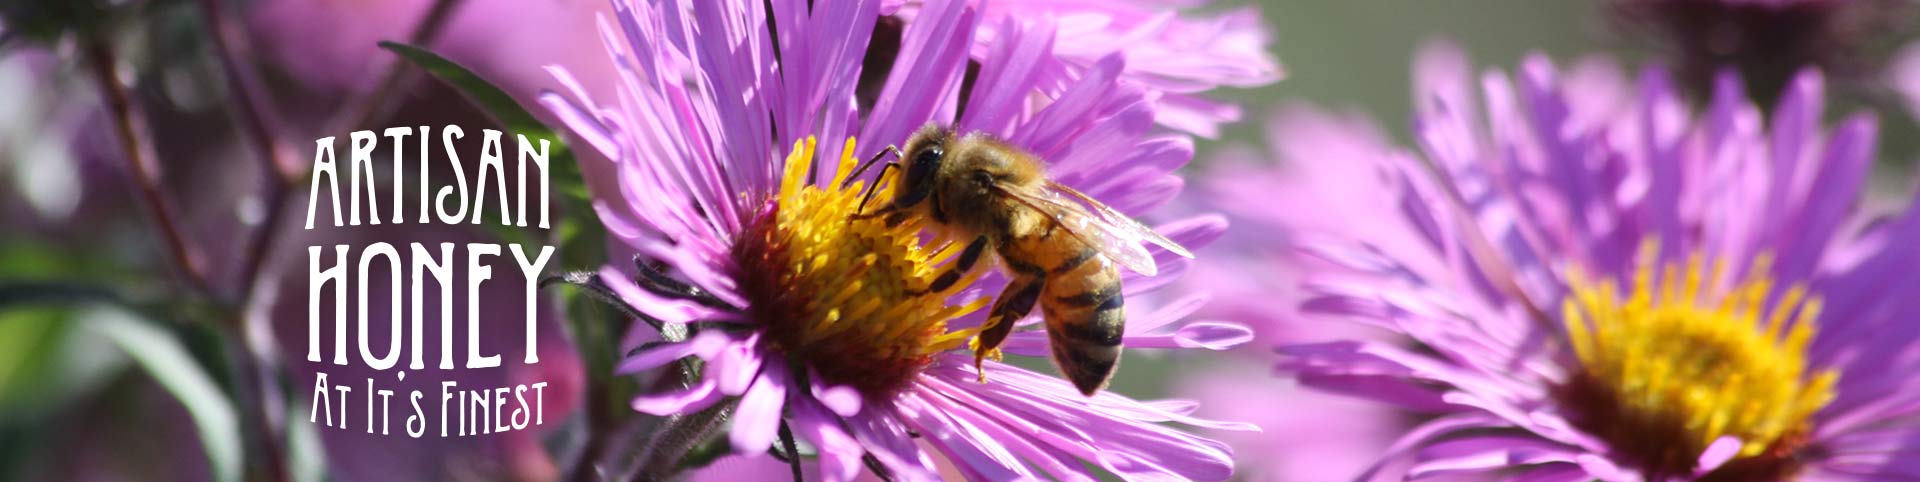 High Grade Bees Wax - Wisconsin Natural Acres